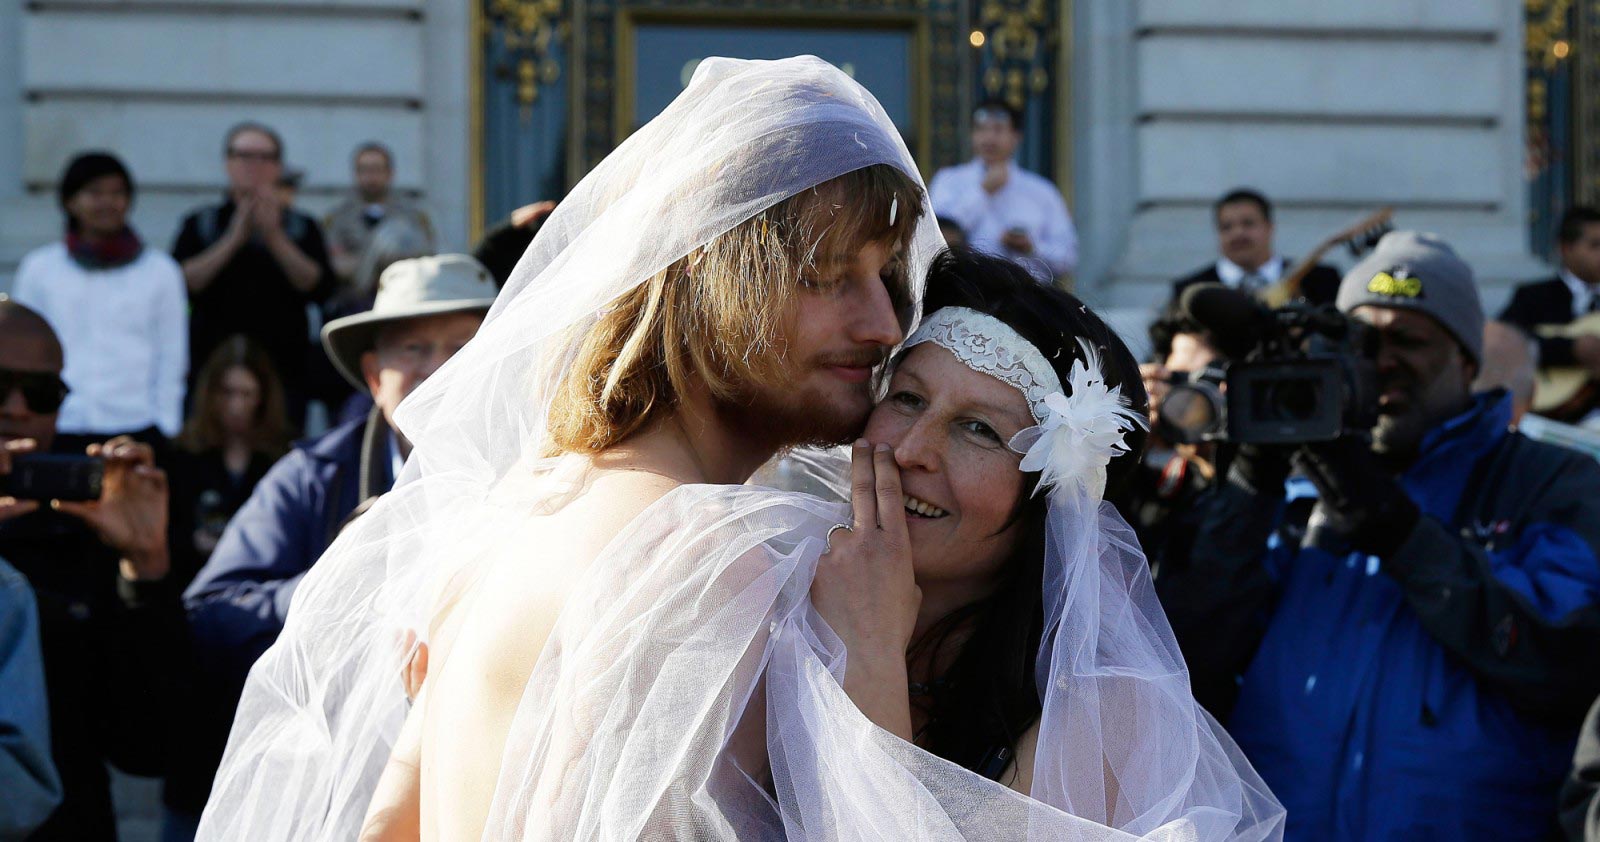 Gypsy Taub Nudist Couple Nude Wedding Nude - The Trent